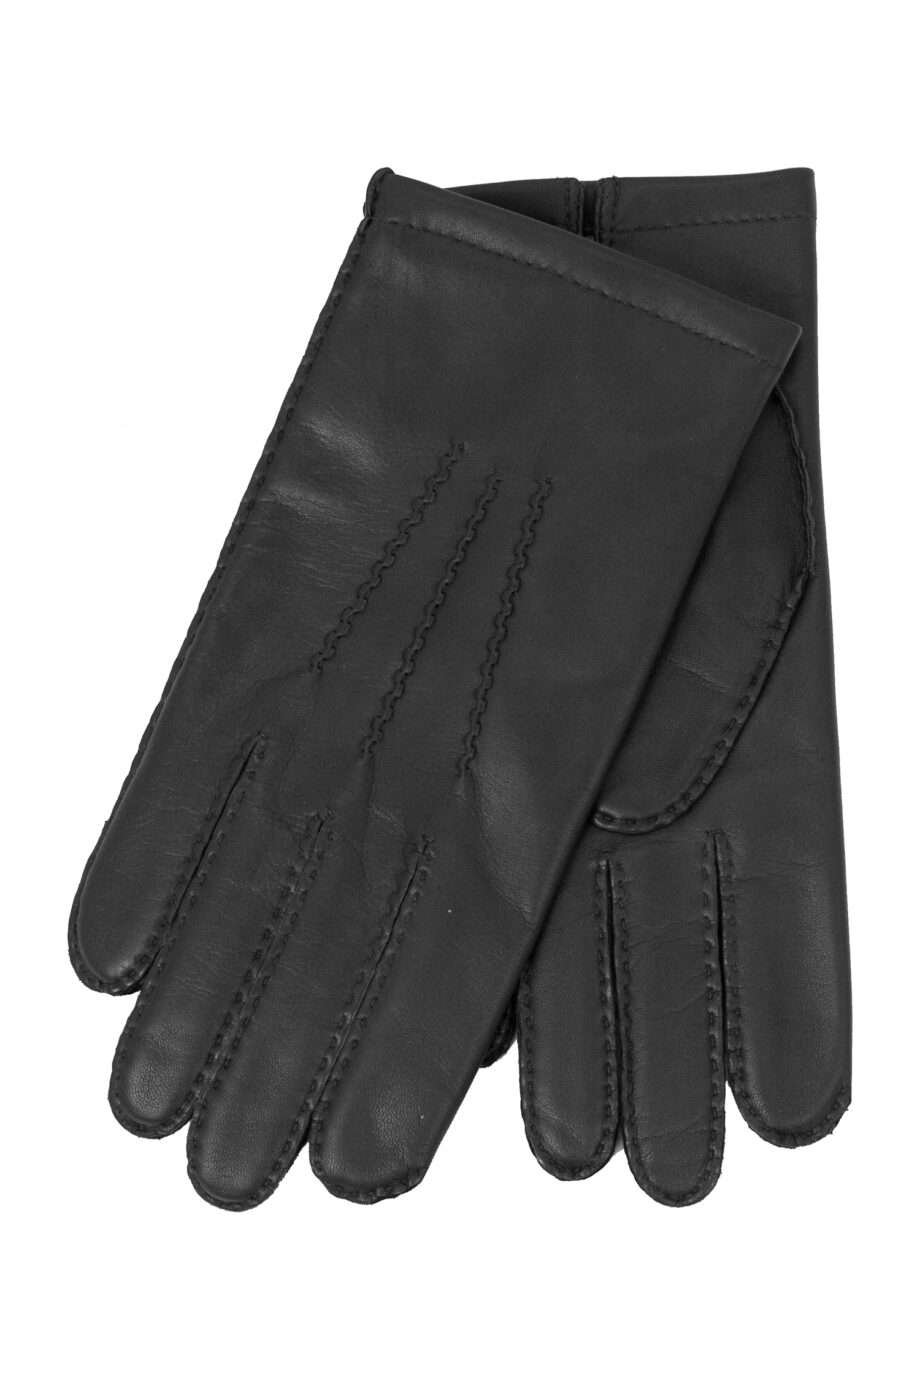 classic black leather glove (men) xlarge